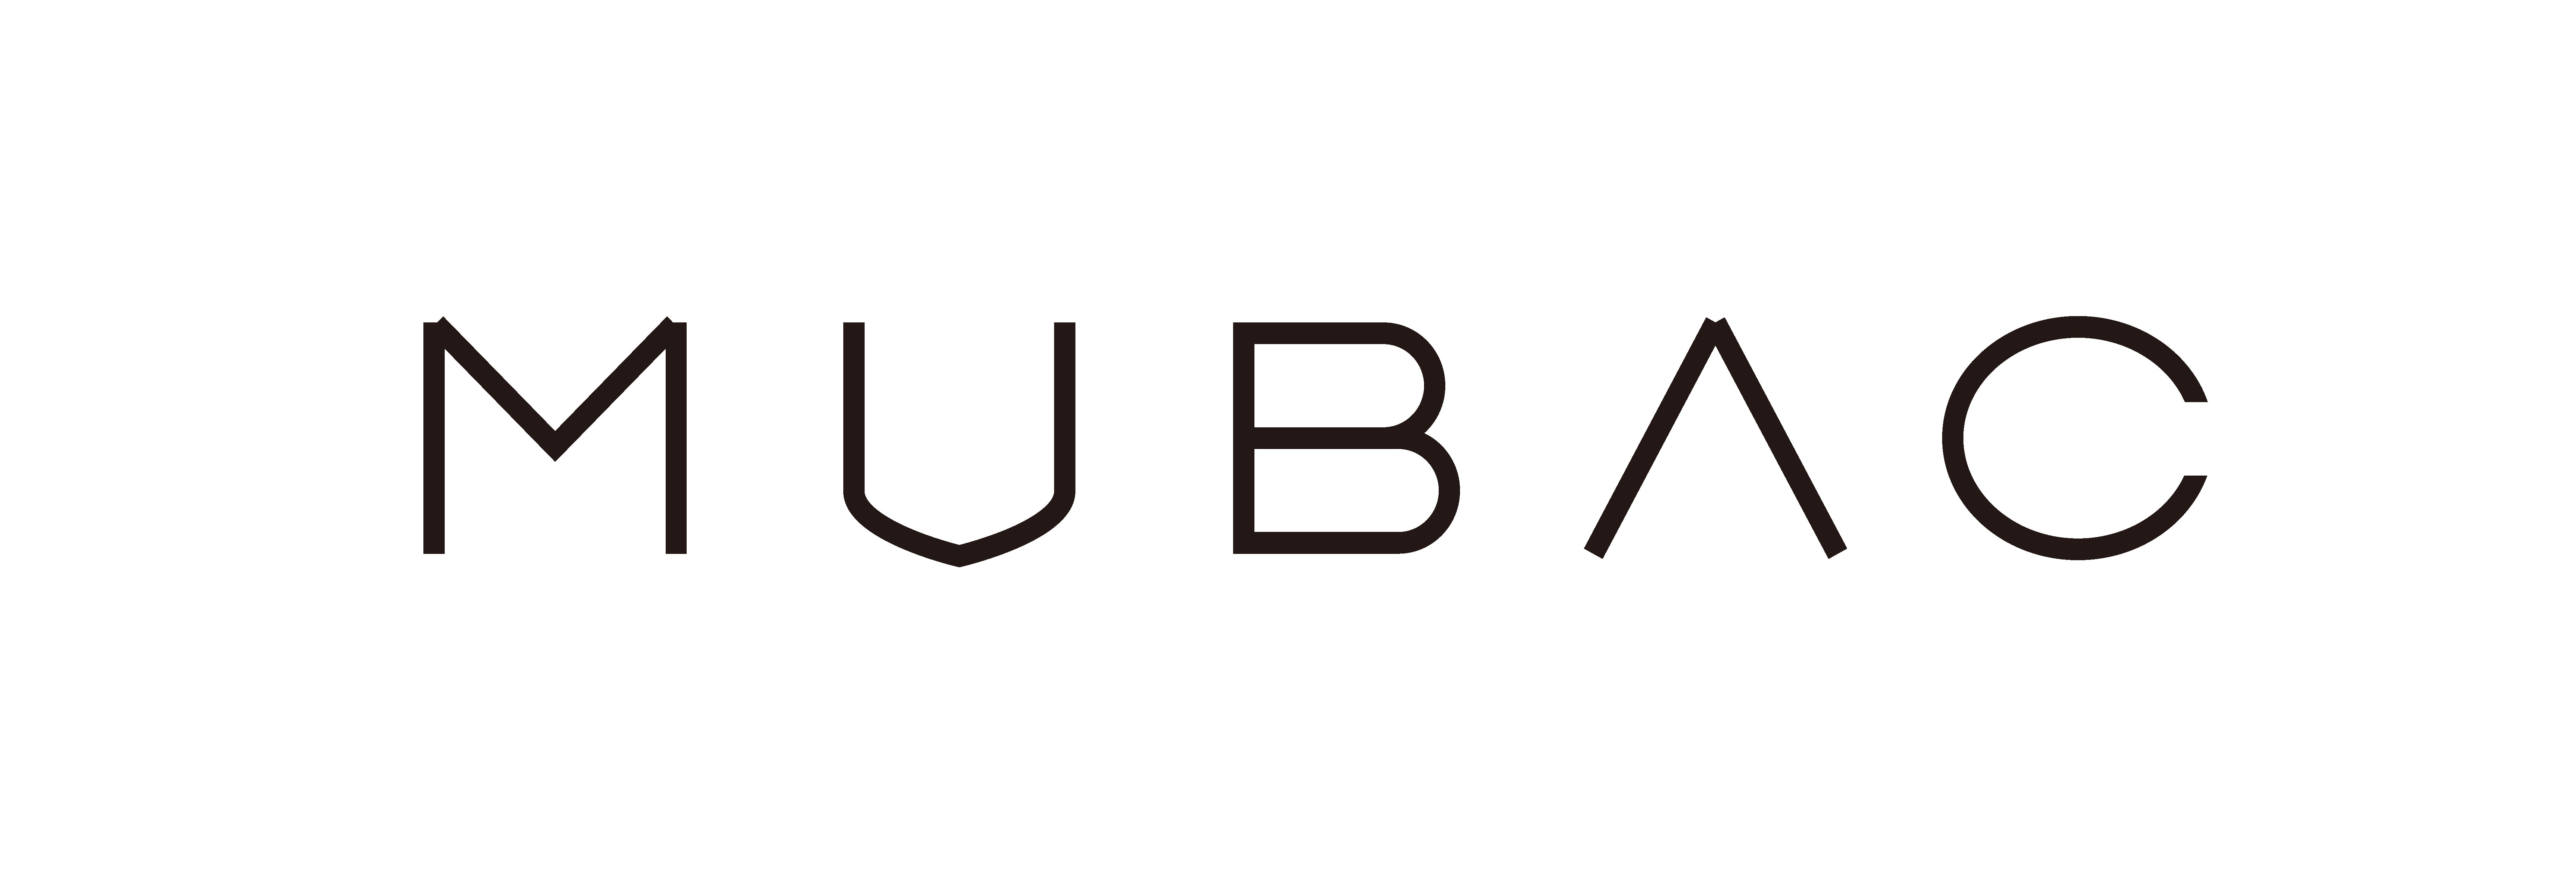 MUBAC brand site